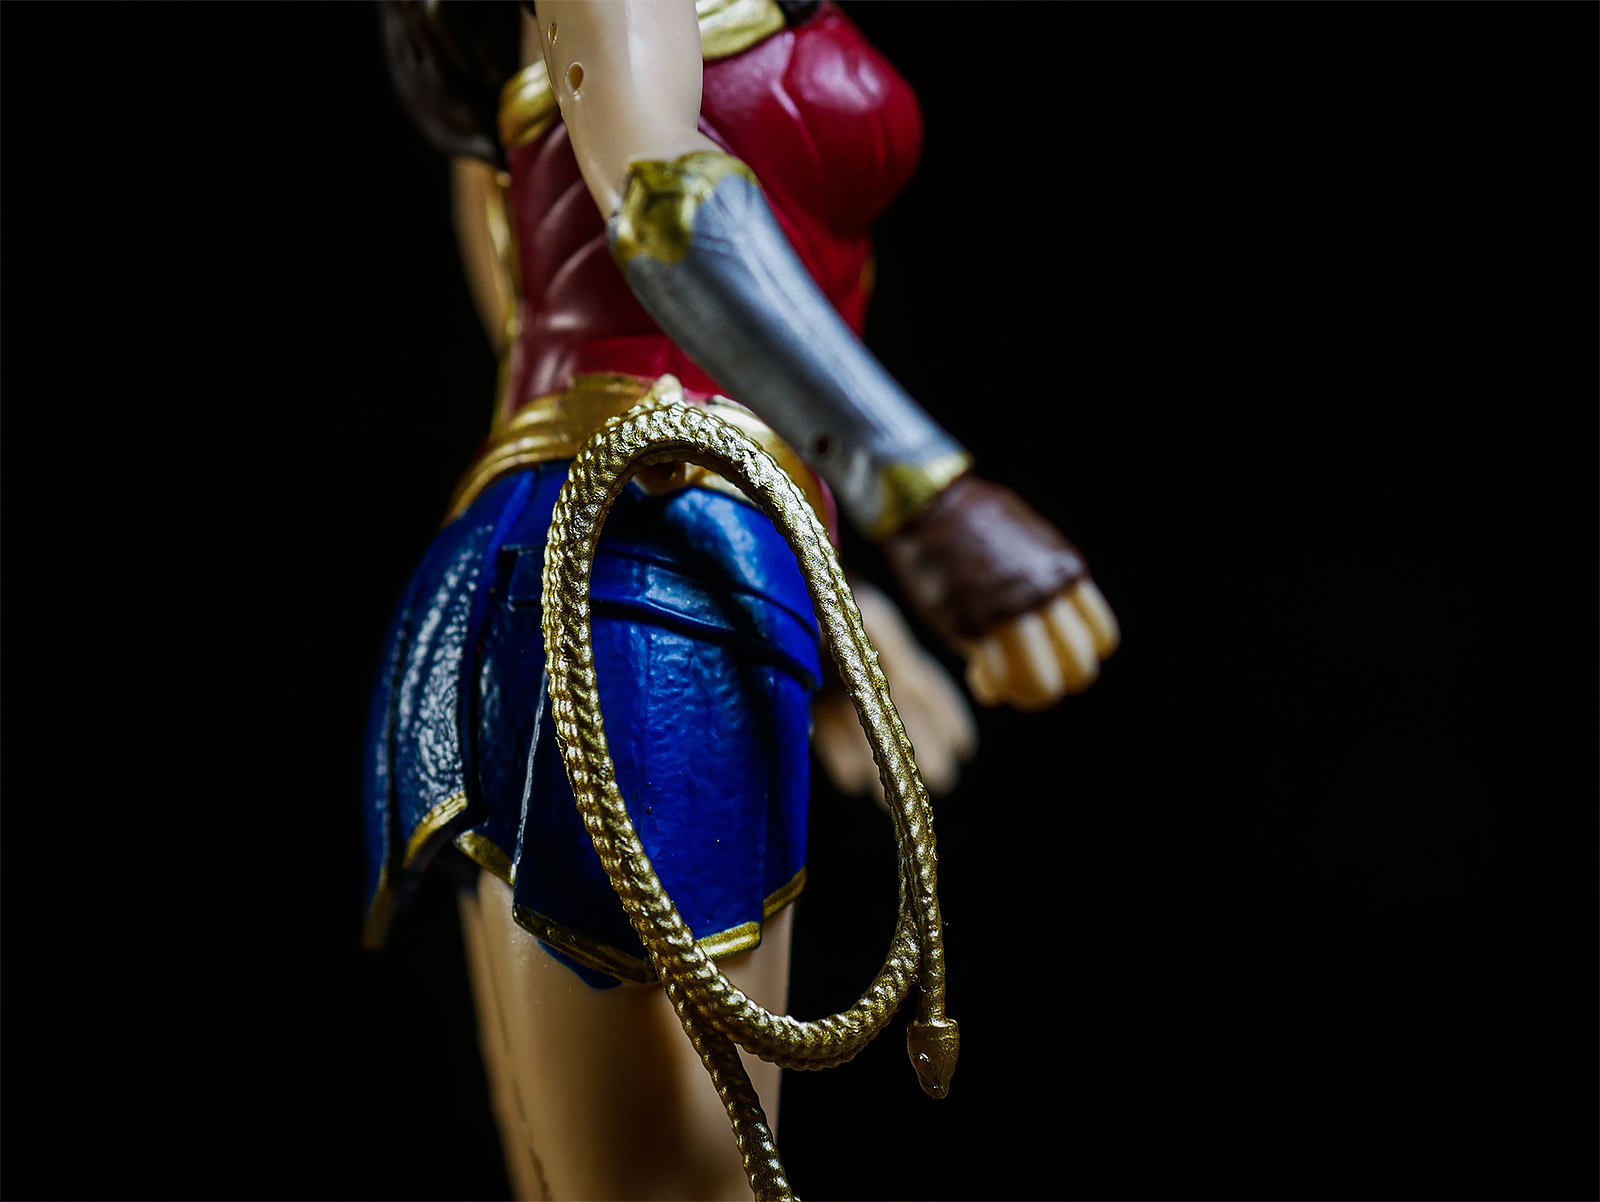 DC Comics - Wonder Woman Bendyfigs figure 19 cm